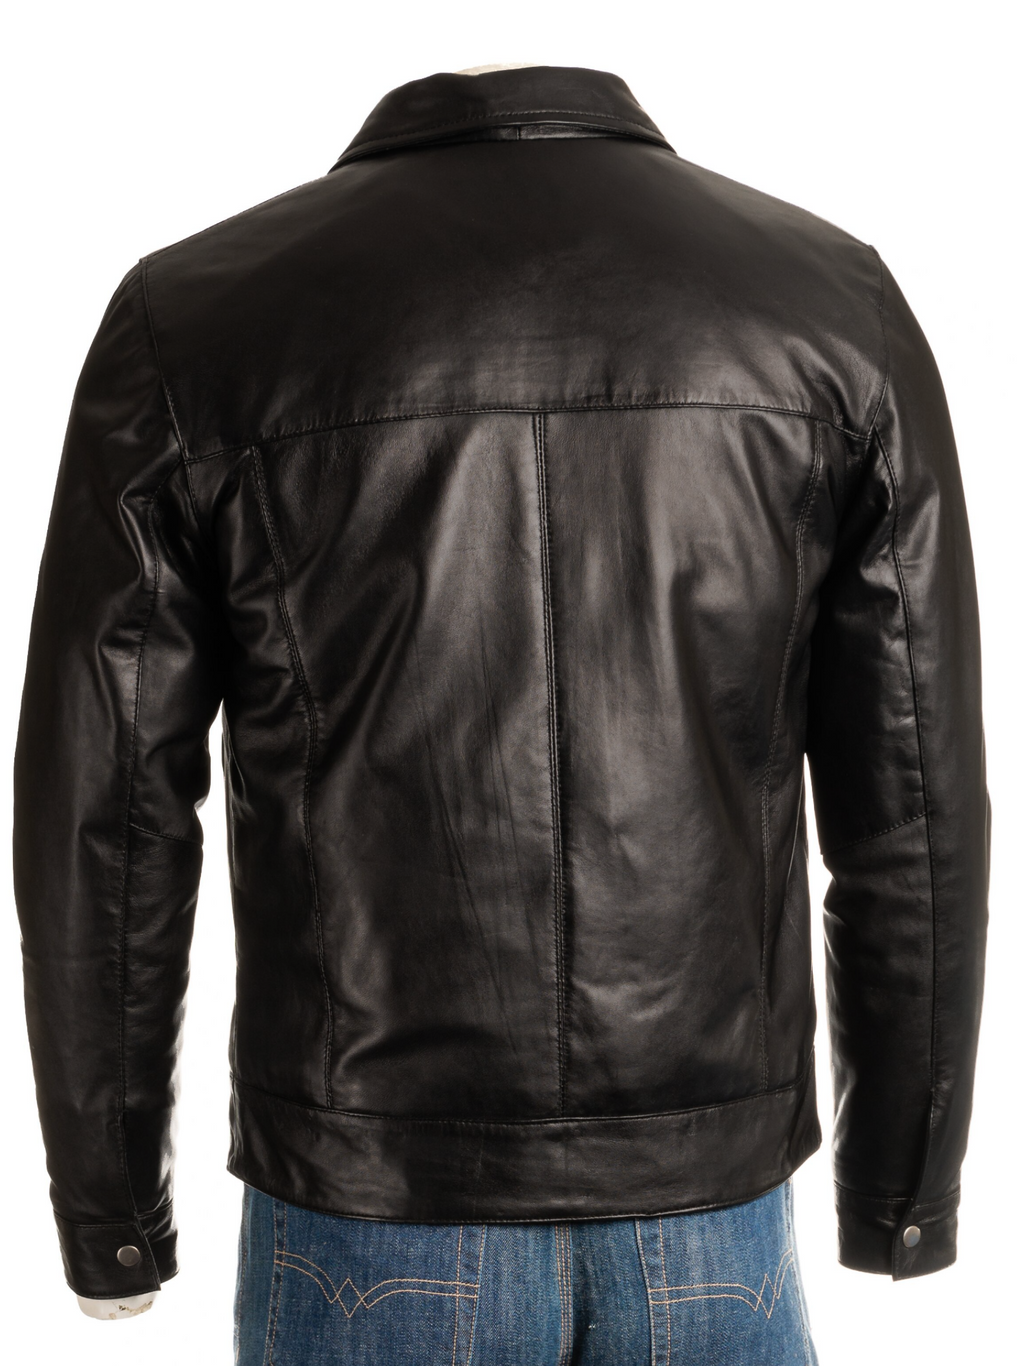 Men's Black Harrington Style Bomber Leather Jacket: Matias